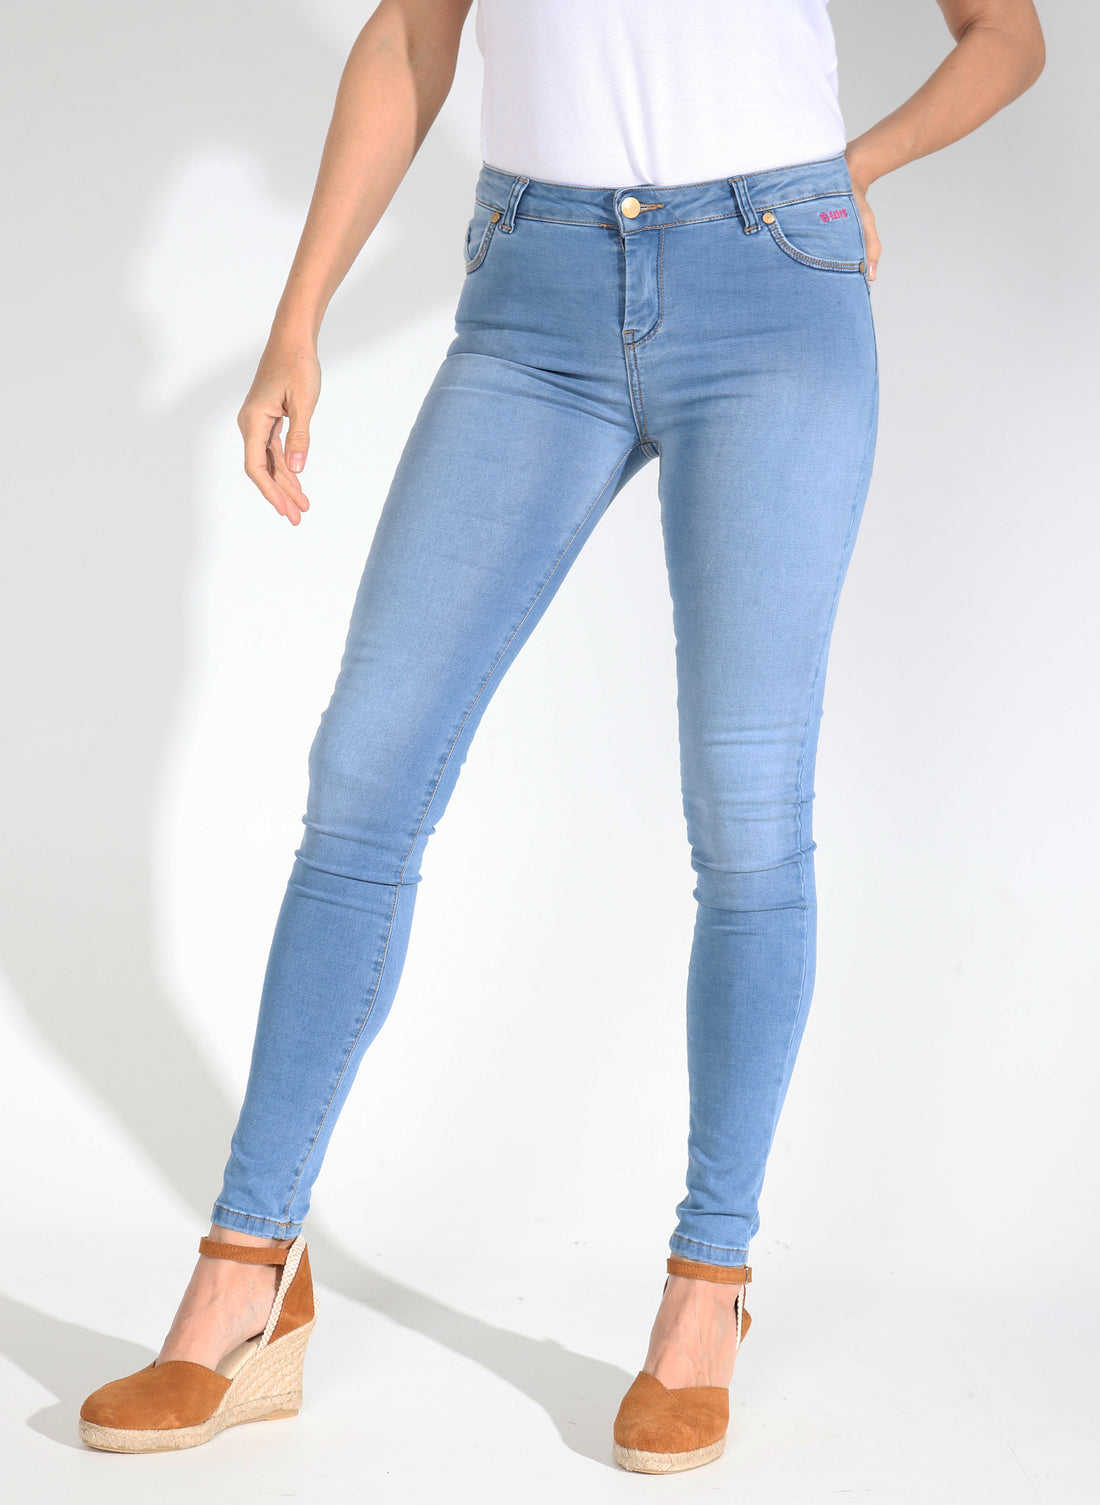 Bleu clair stretch jeans for women